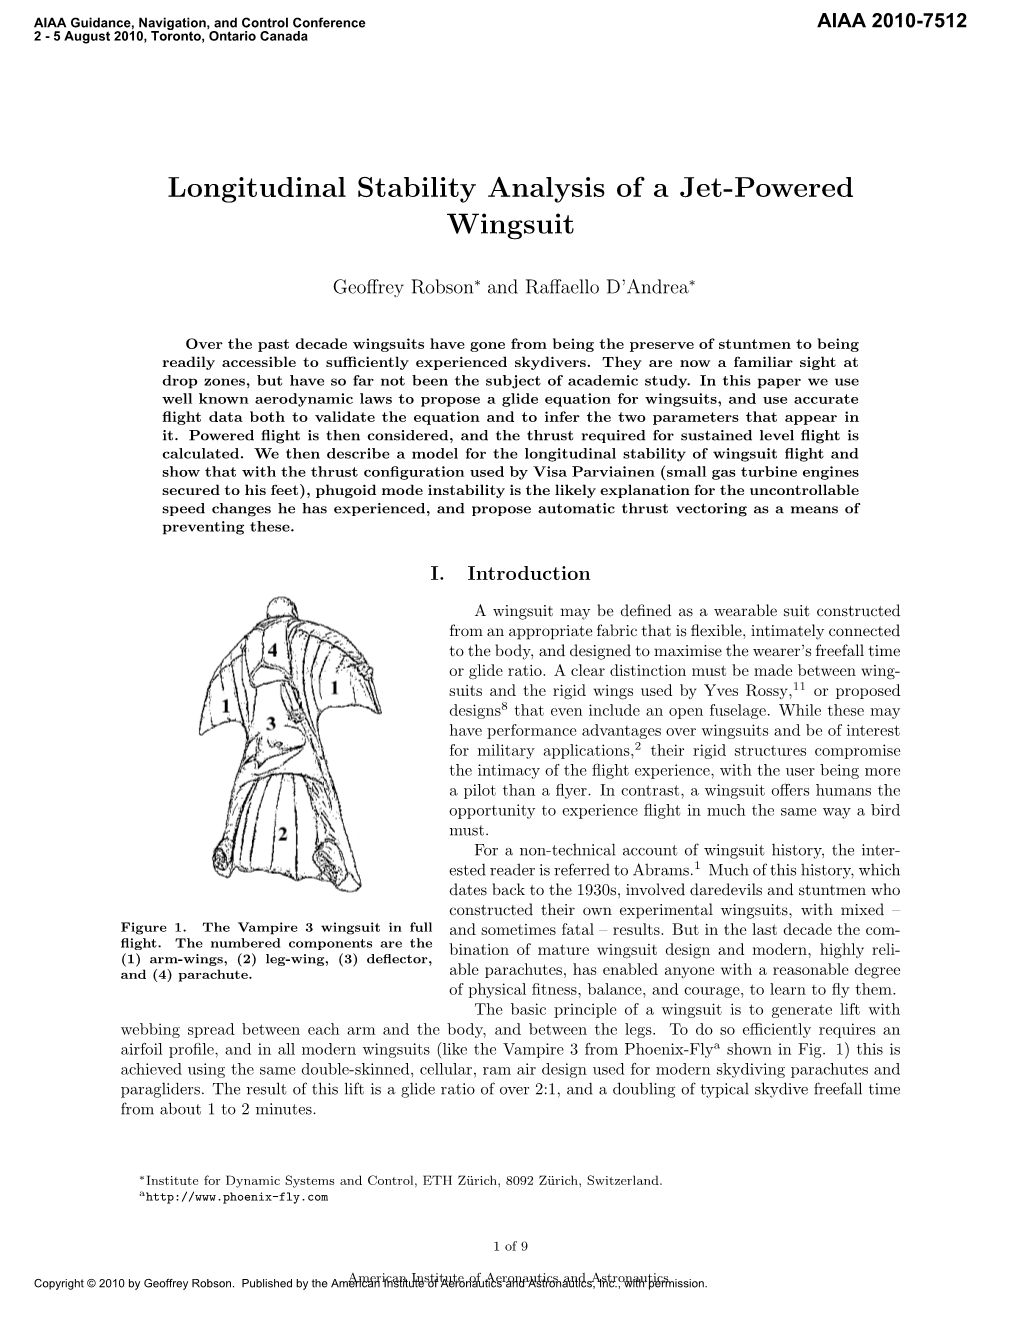 Longitudinal Stability Analysis of a Jet-Powered Wingsuit